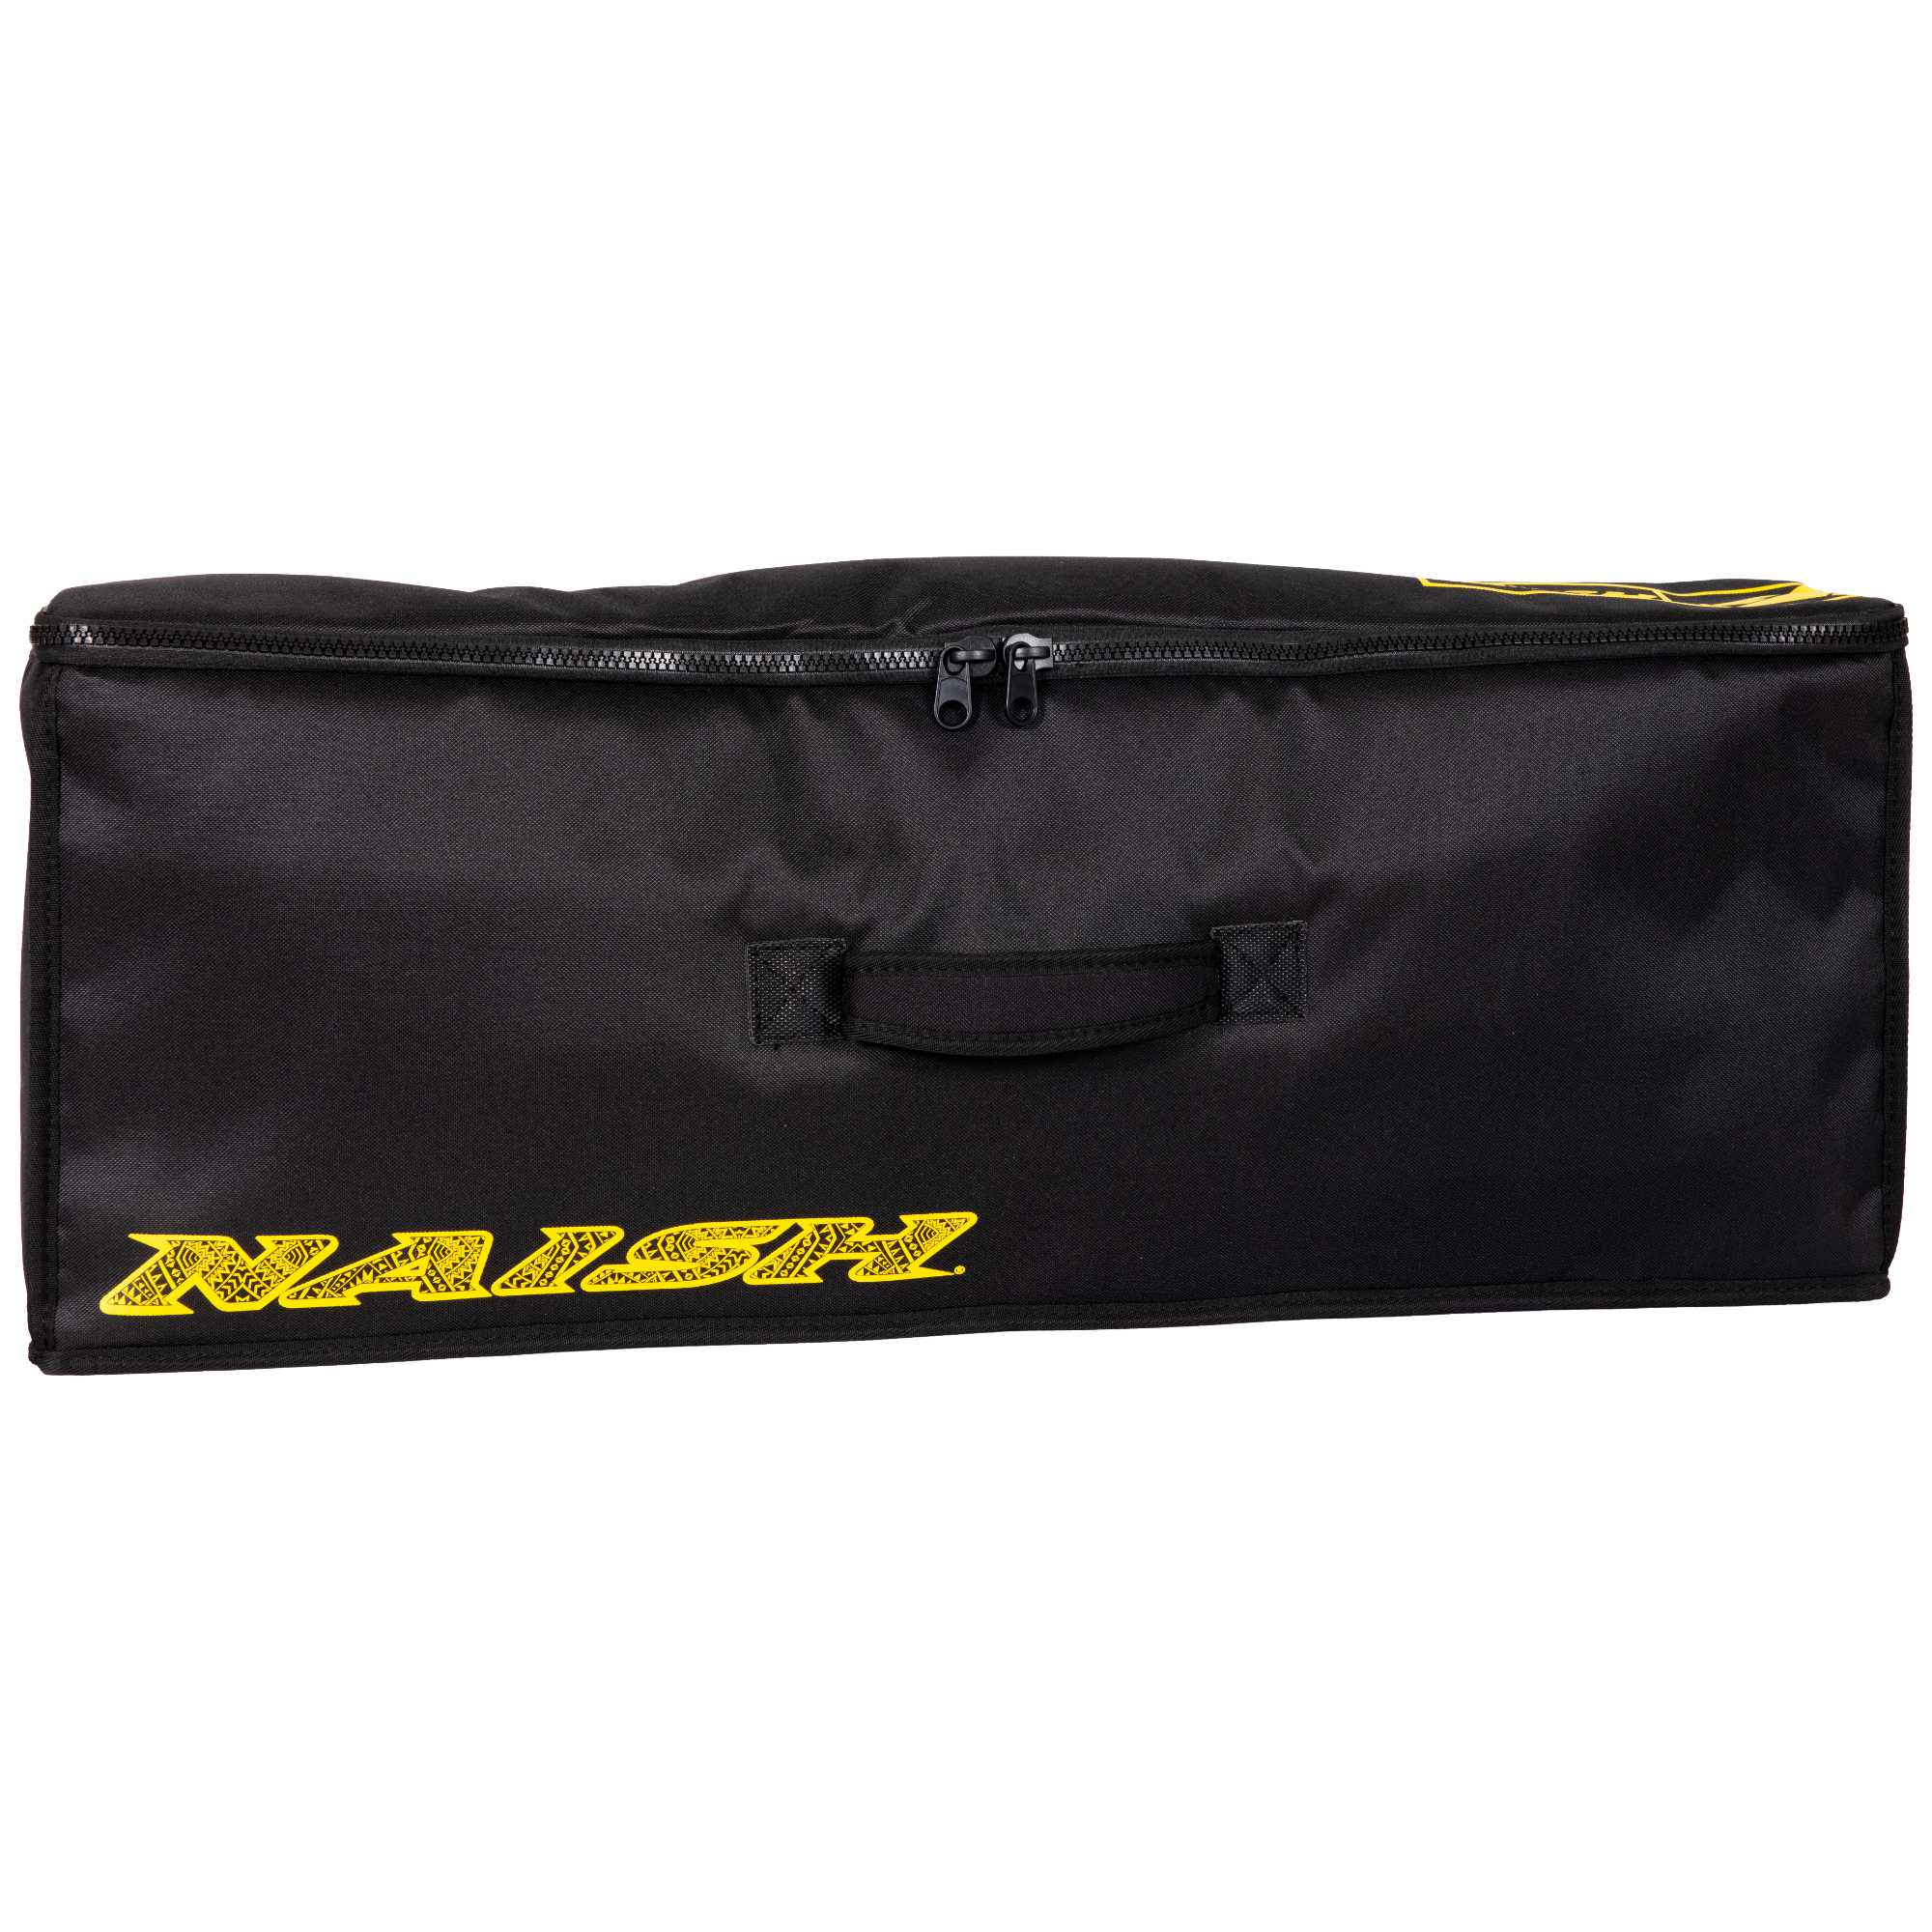 Naish S25 Thrust Foil Case - Bag Tasche für Foils